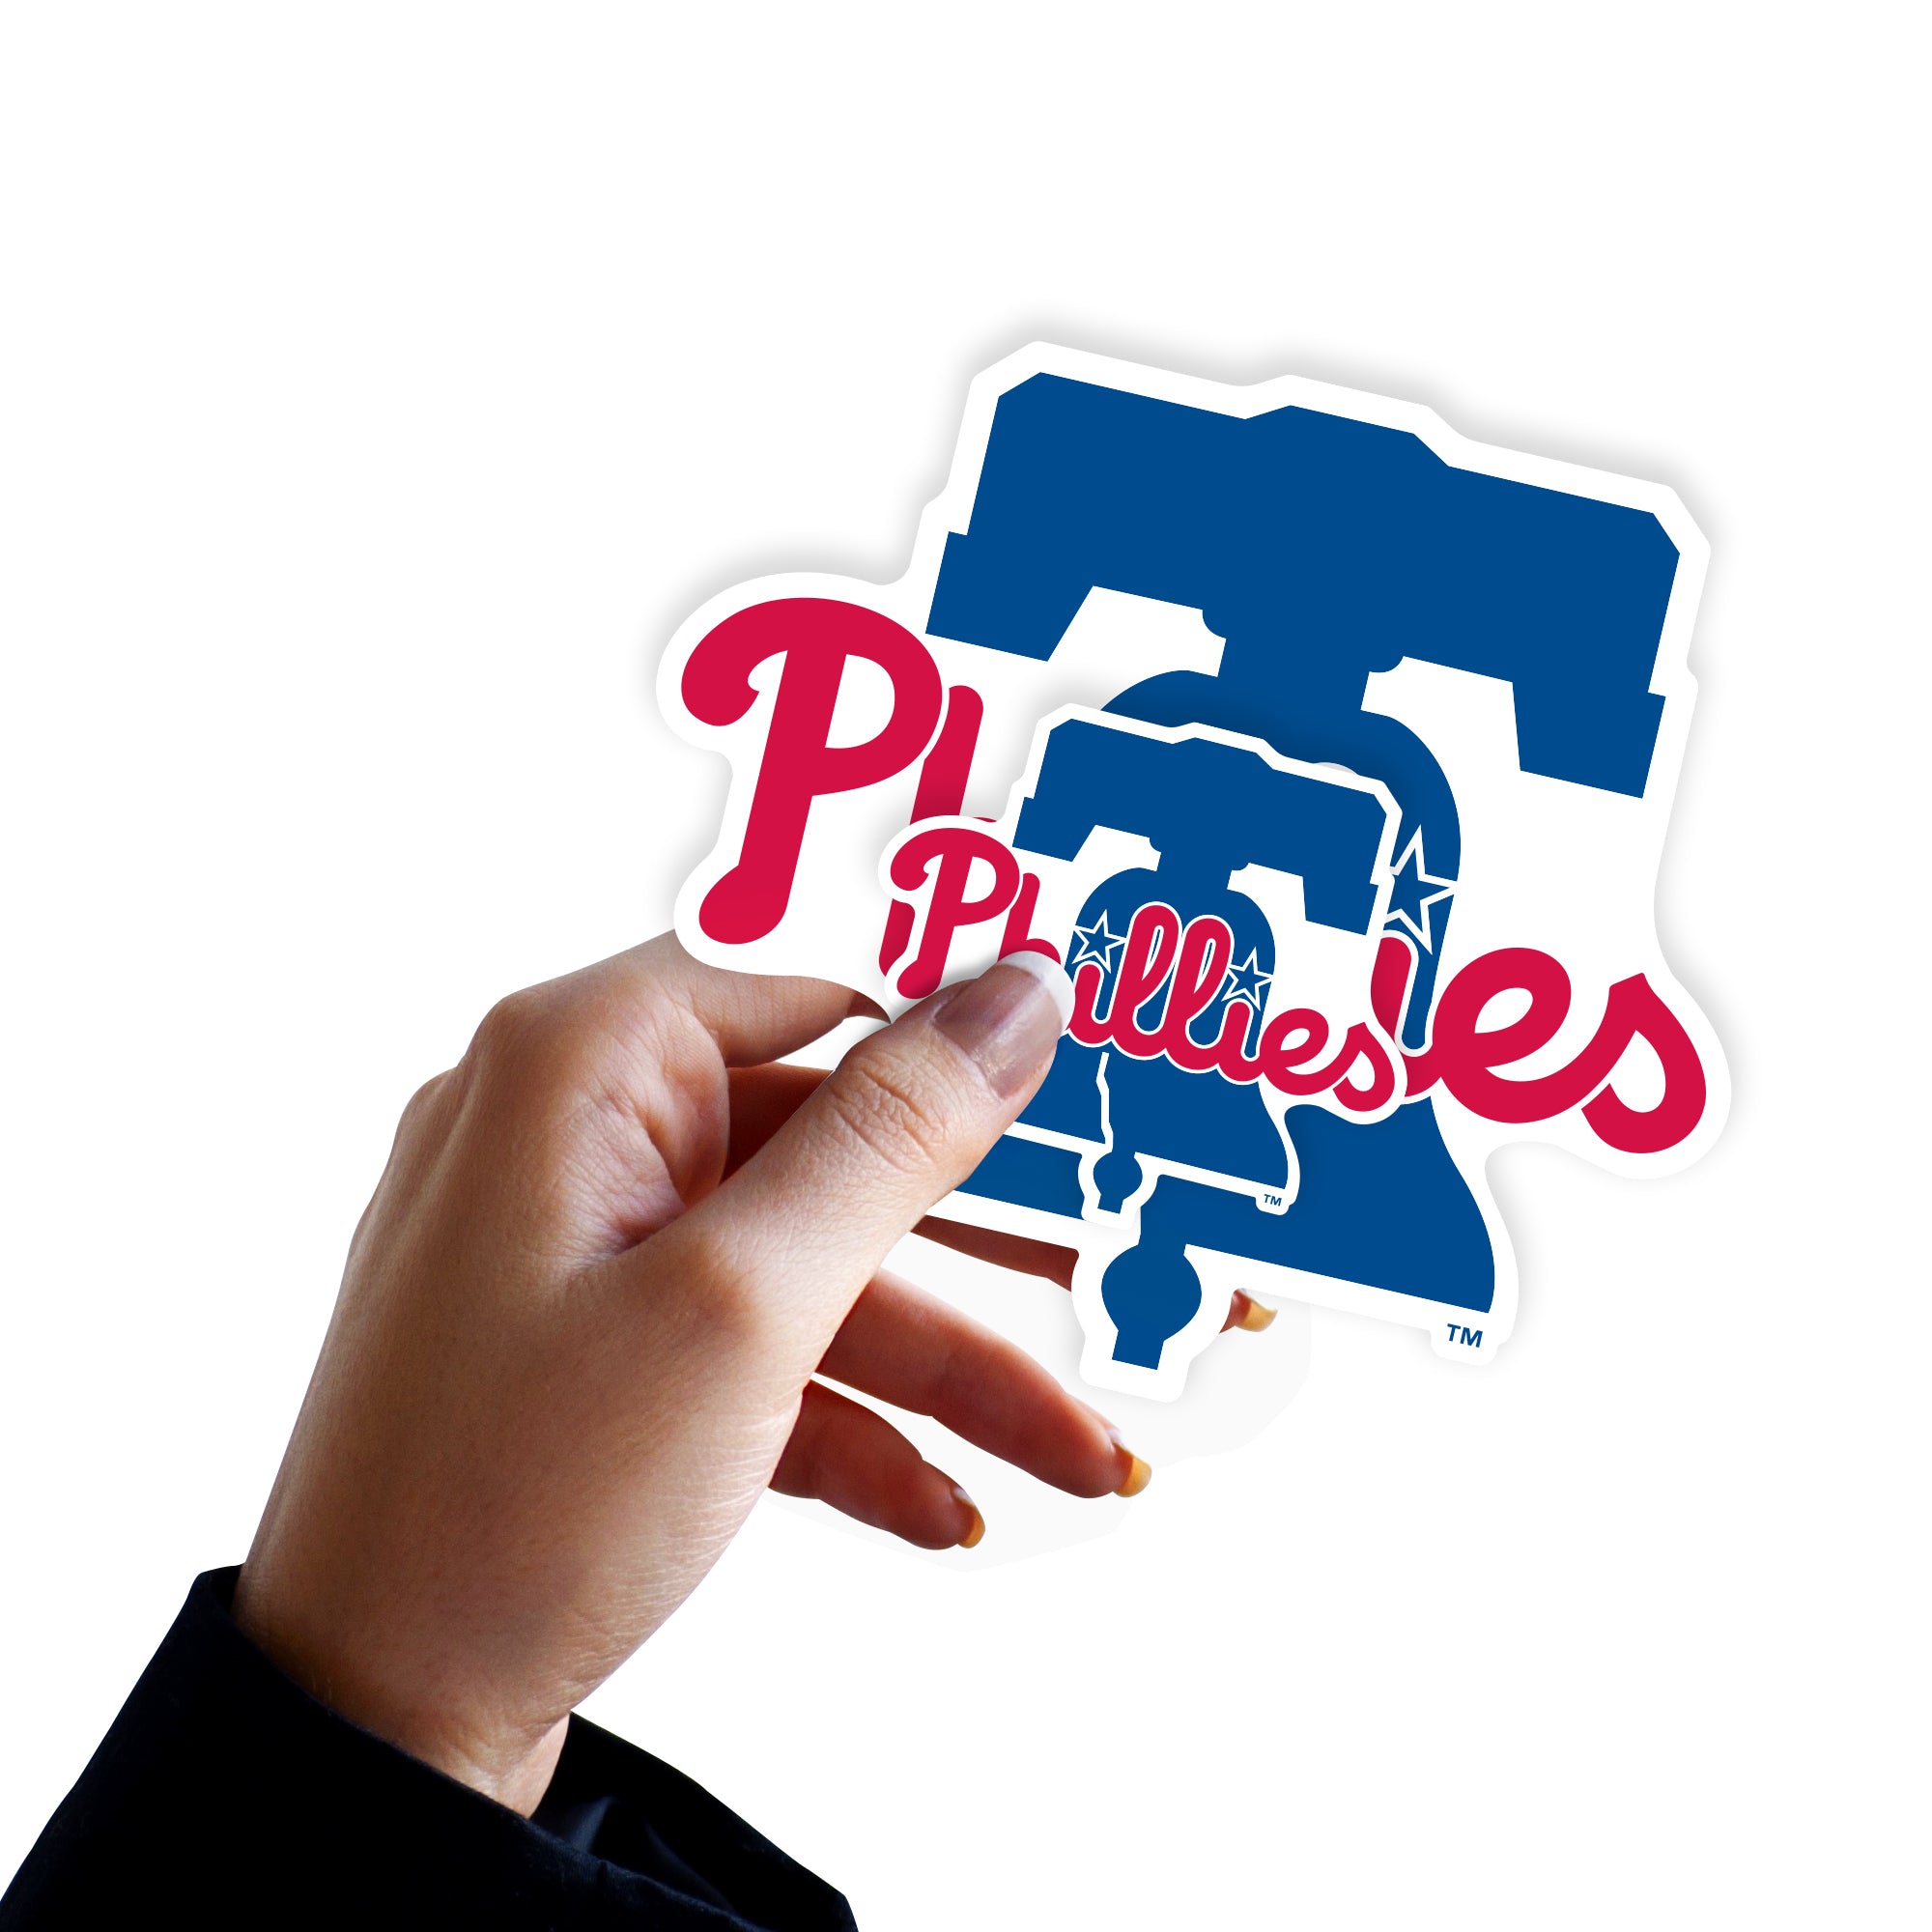 Philadelphia Phillies 10-Inch Team Logo Glove